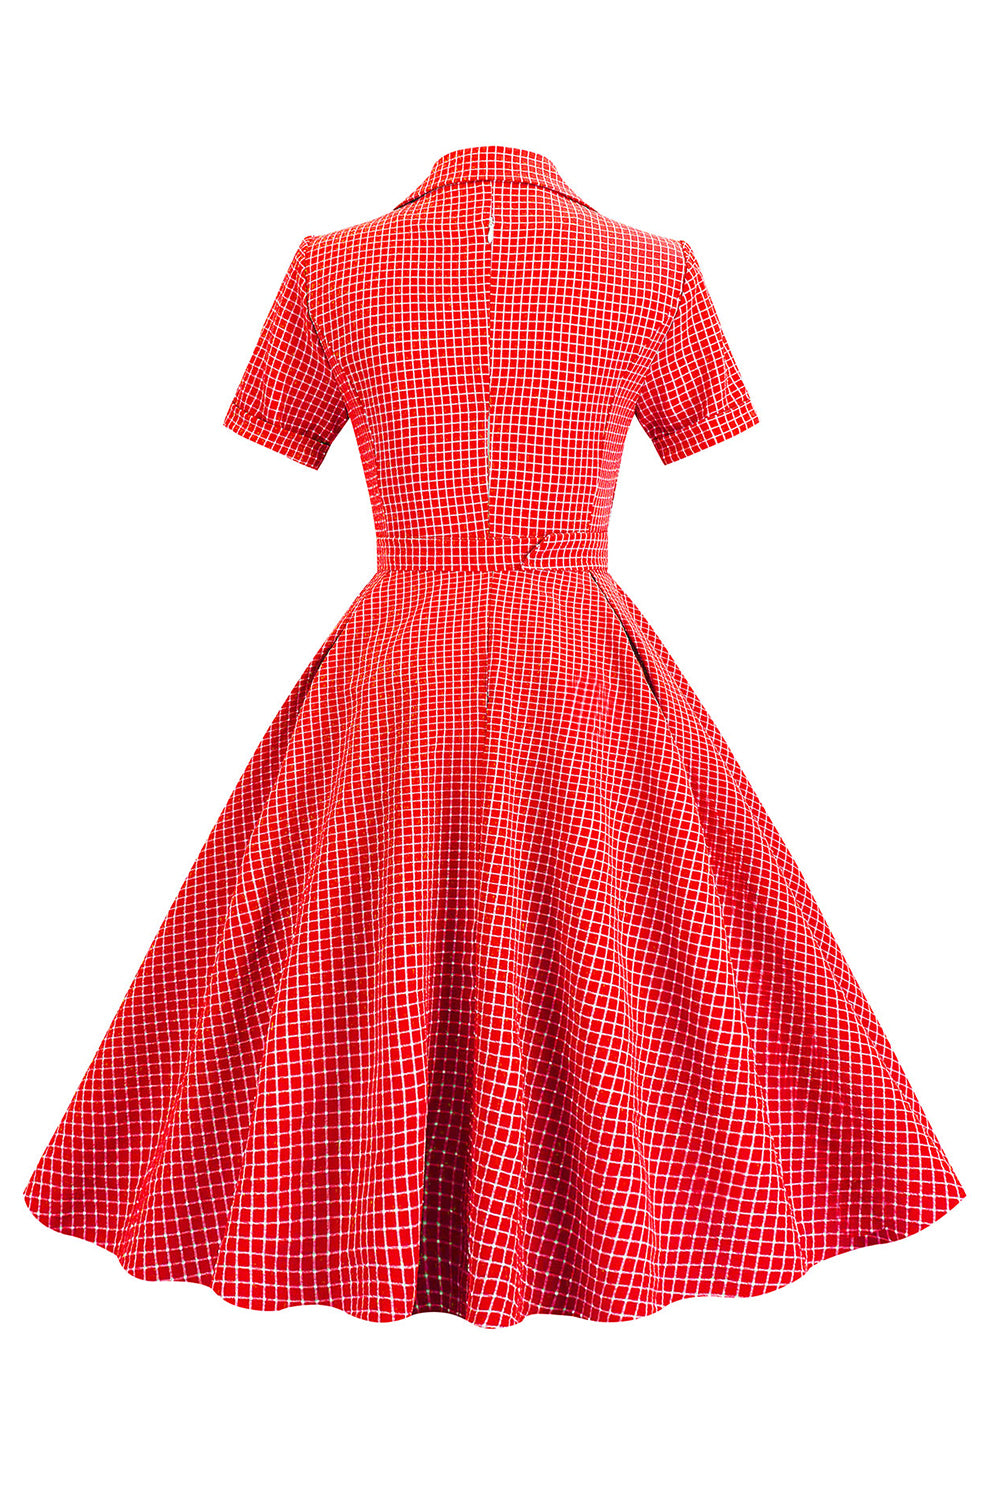 Retro Style Red Plaid 1950s Dress